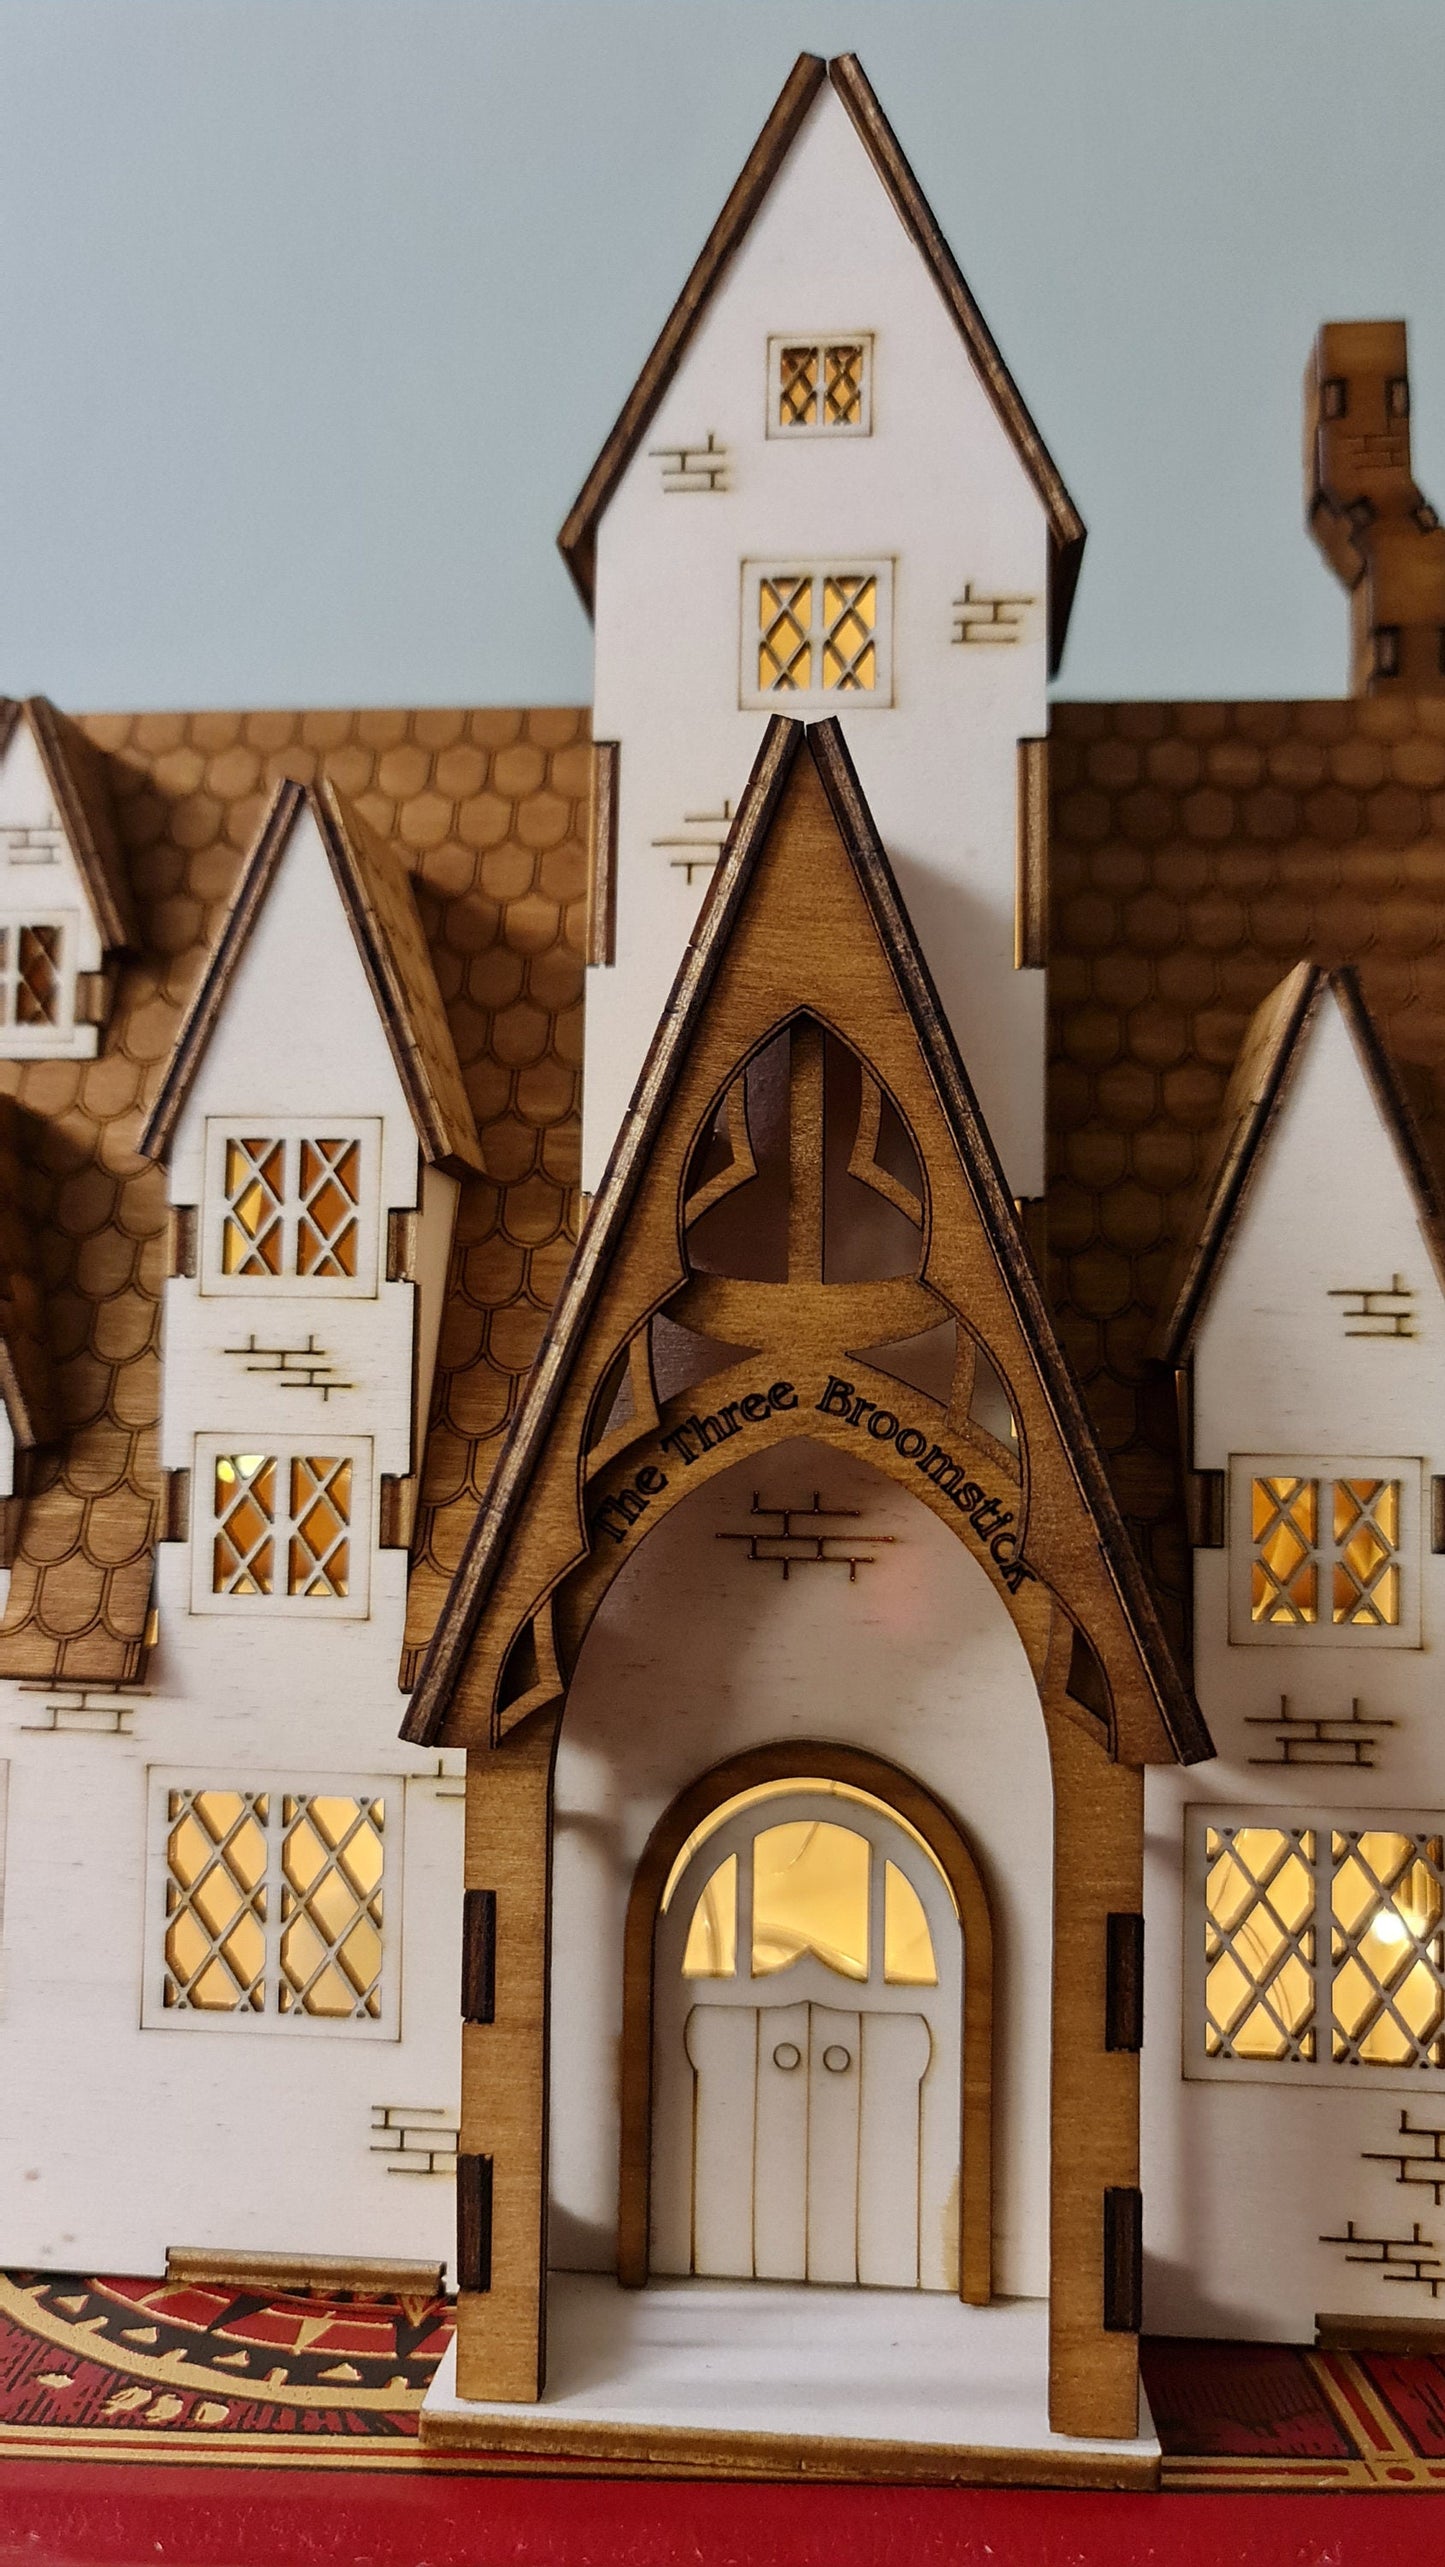 The Wizard's Inn DIY Kit 1:48th Scale, dollhouse , Miniature kit model